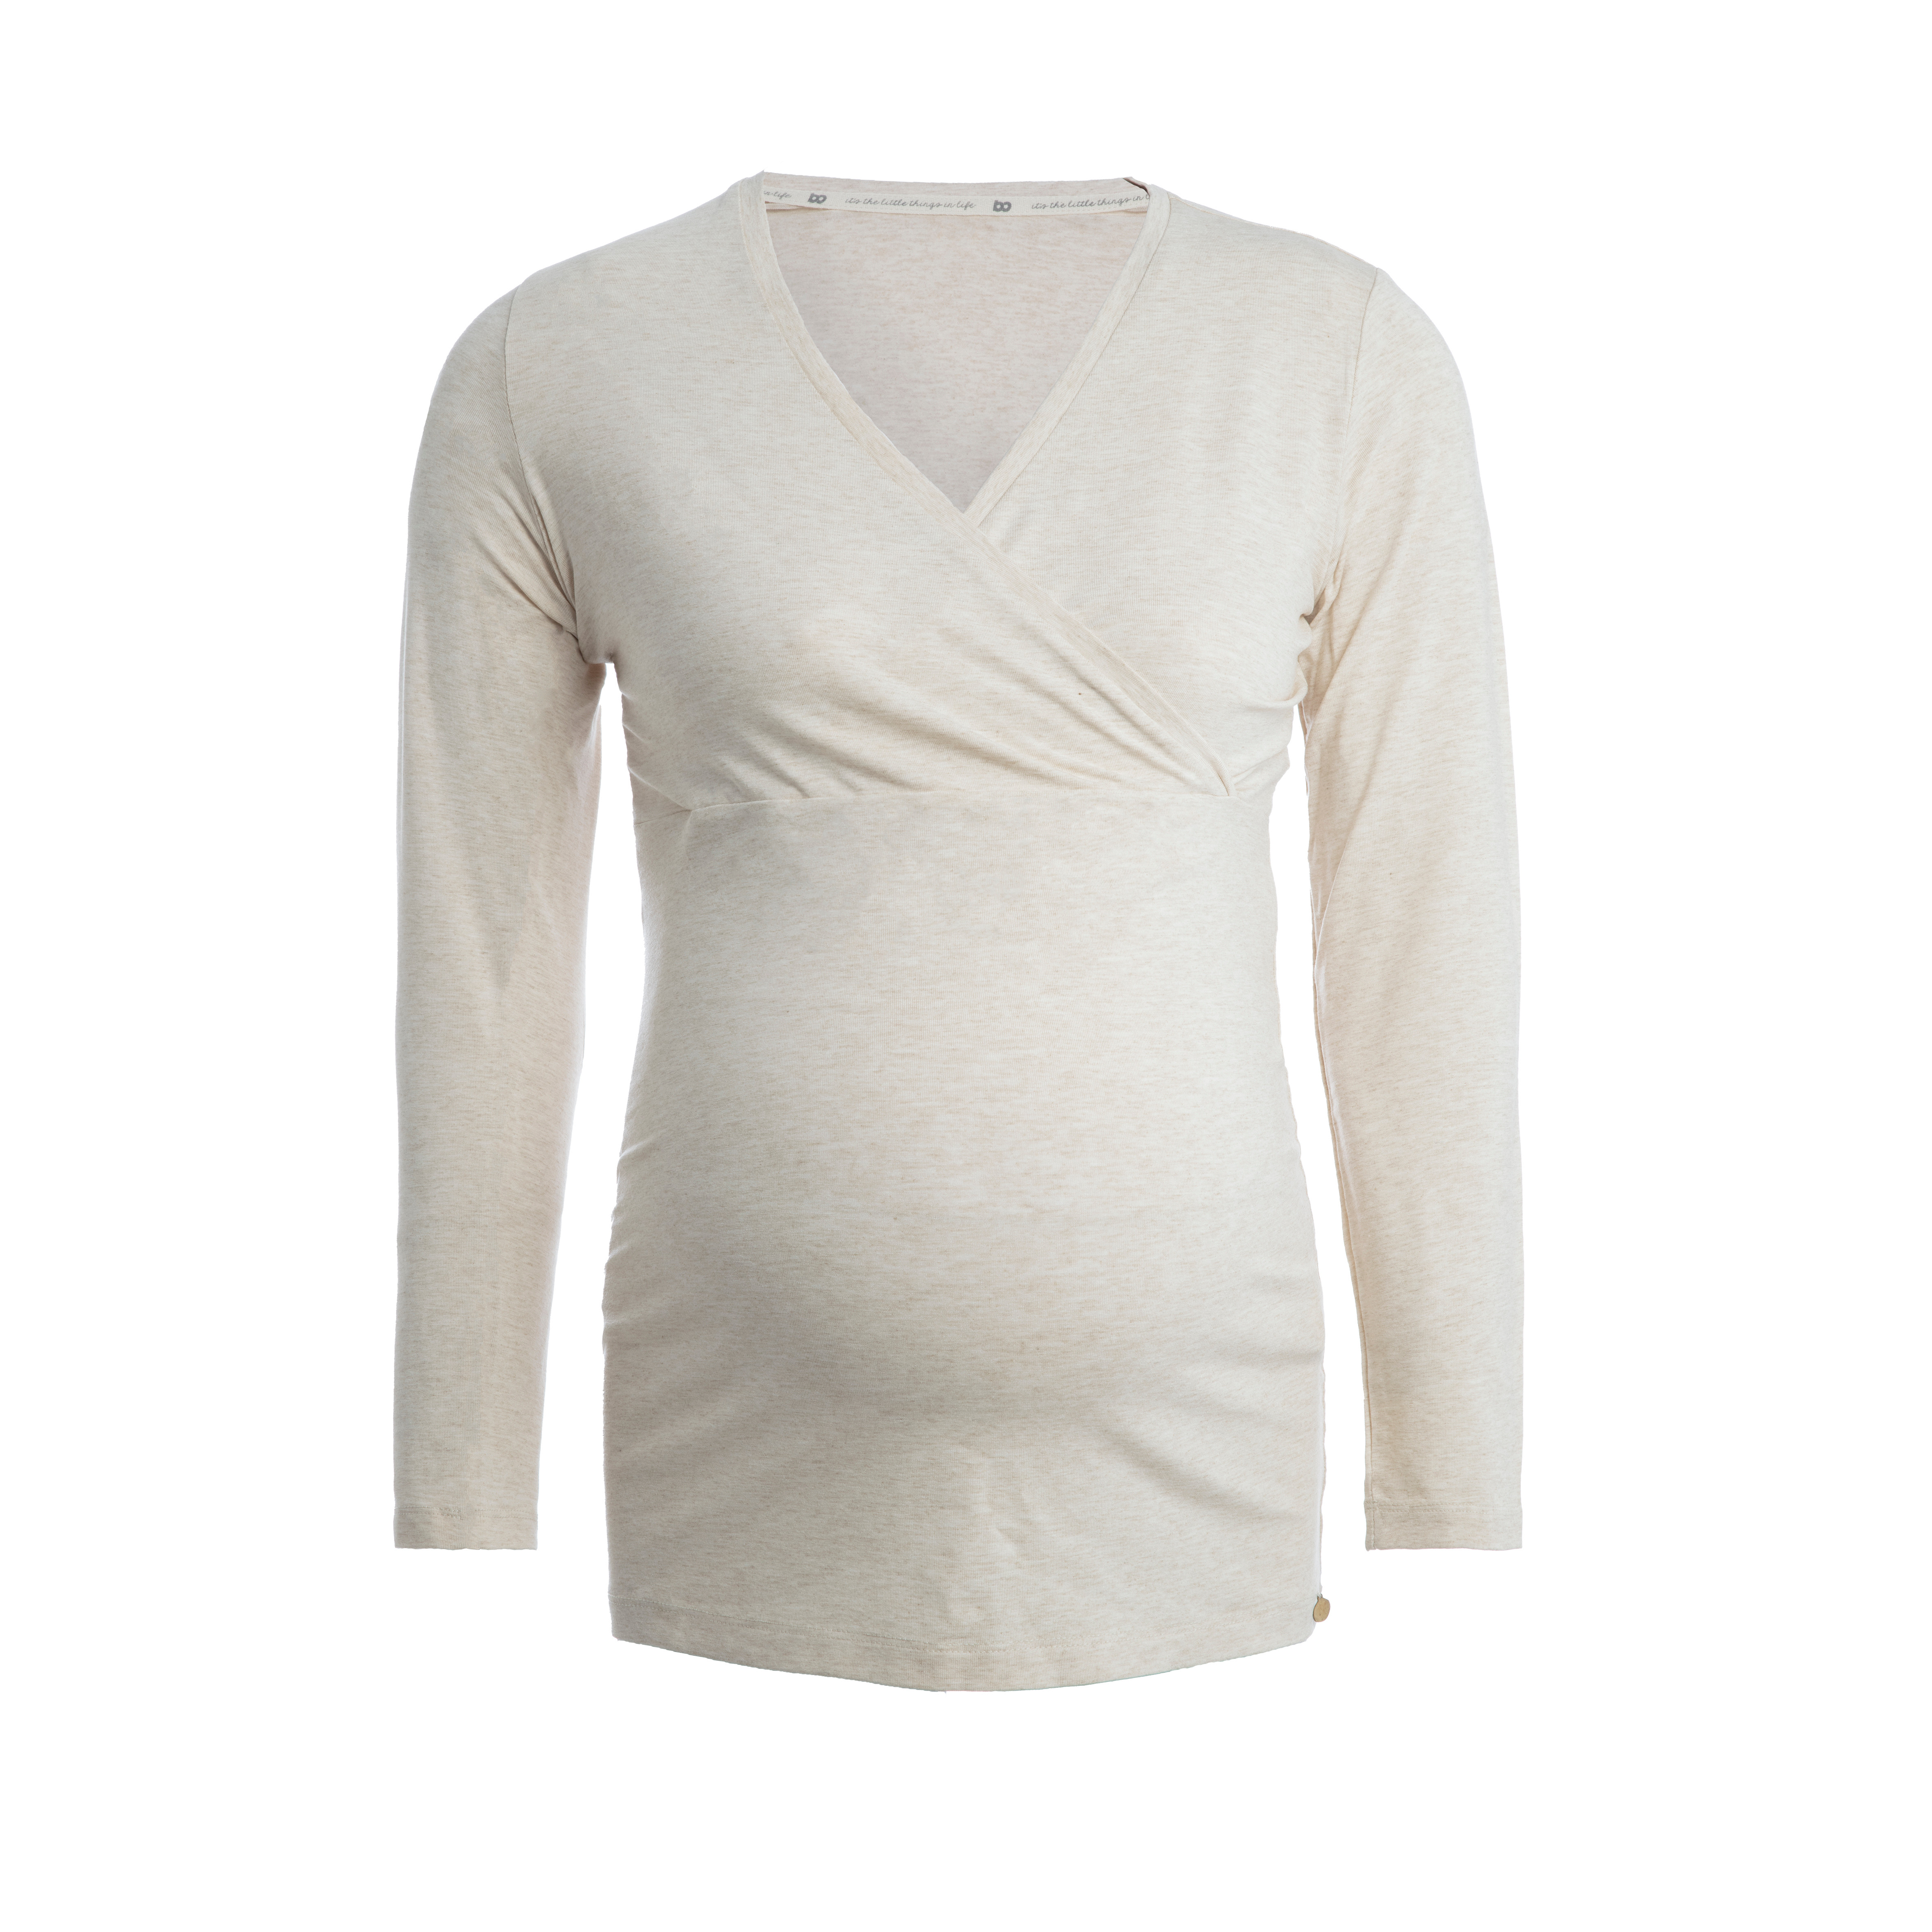 Maternity long sleeve top Glow ecru - S - With nursing function